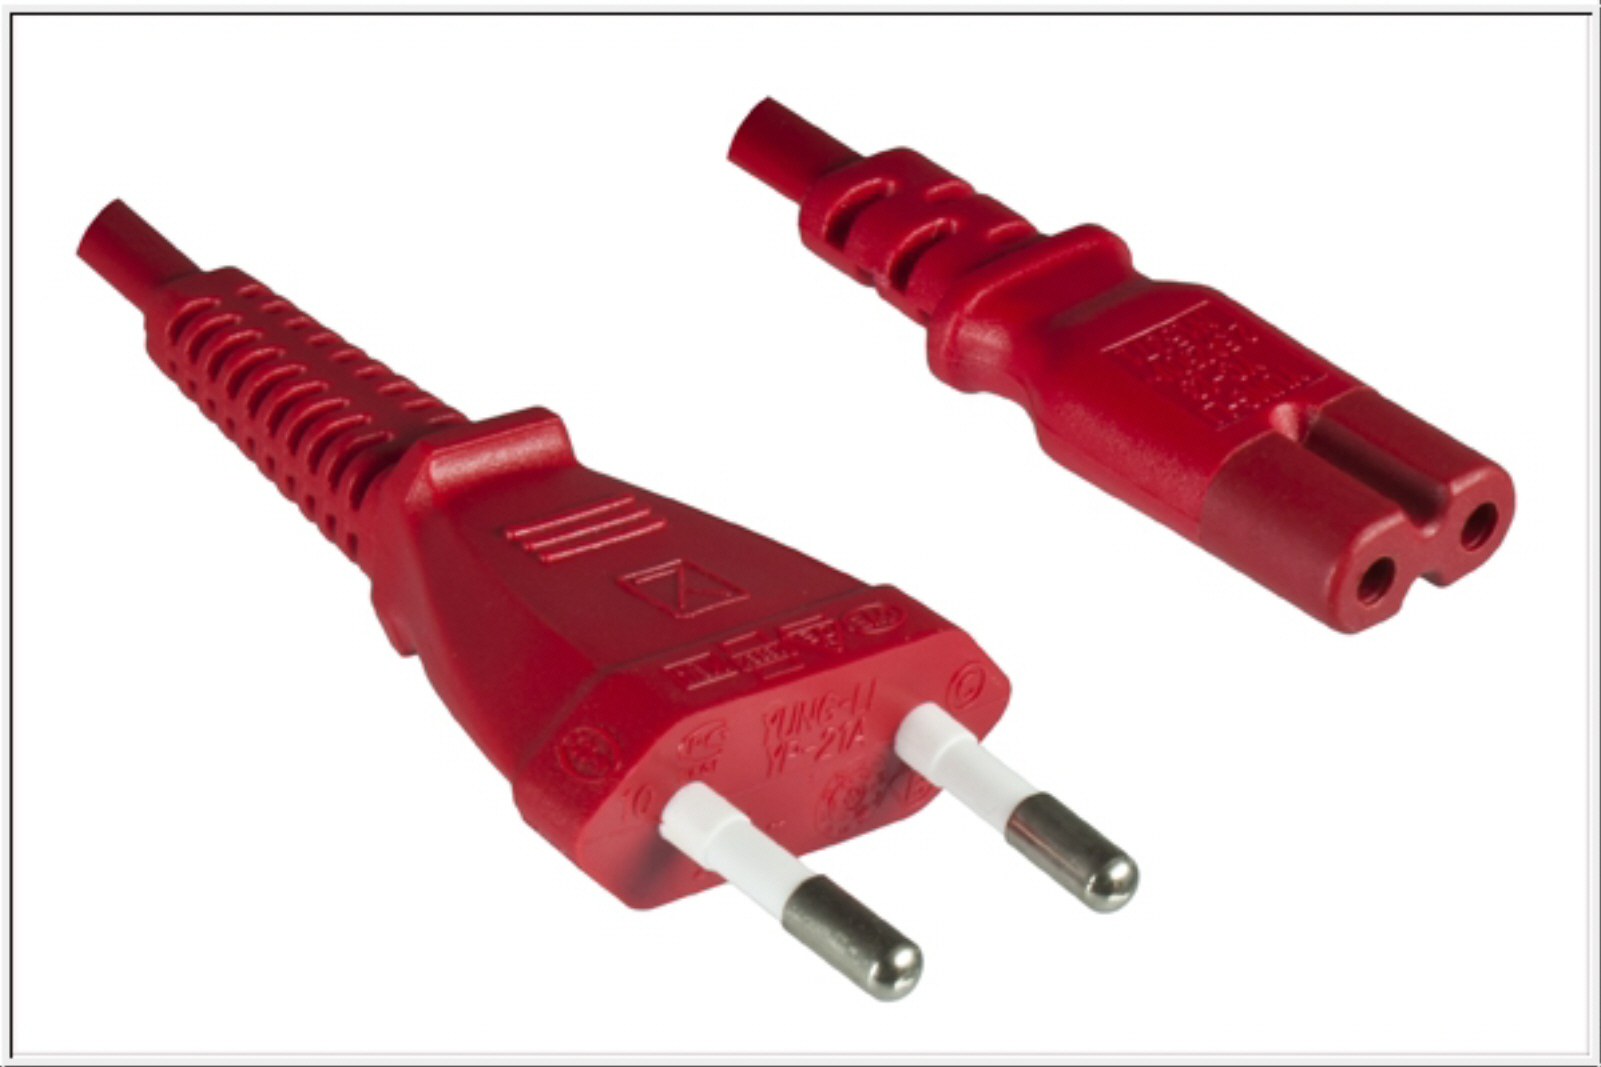 Netzkabel Eurostecker/IEC 60320-C7, rot 180cm, CE